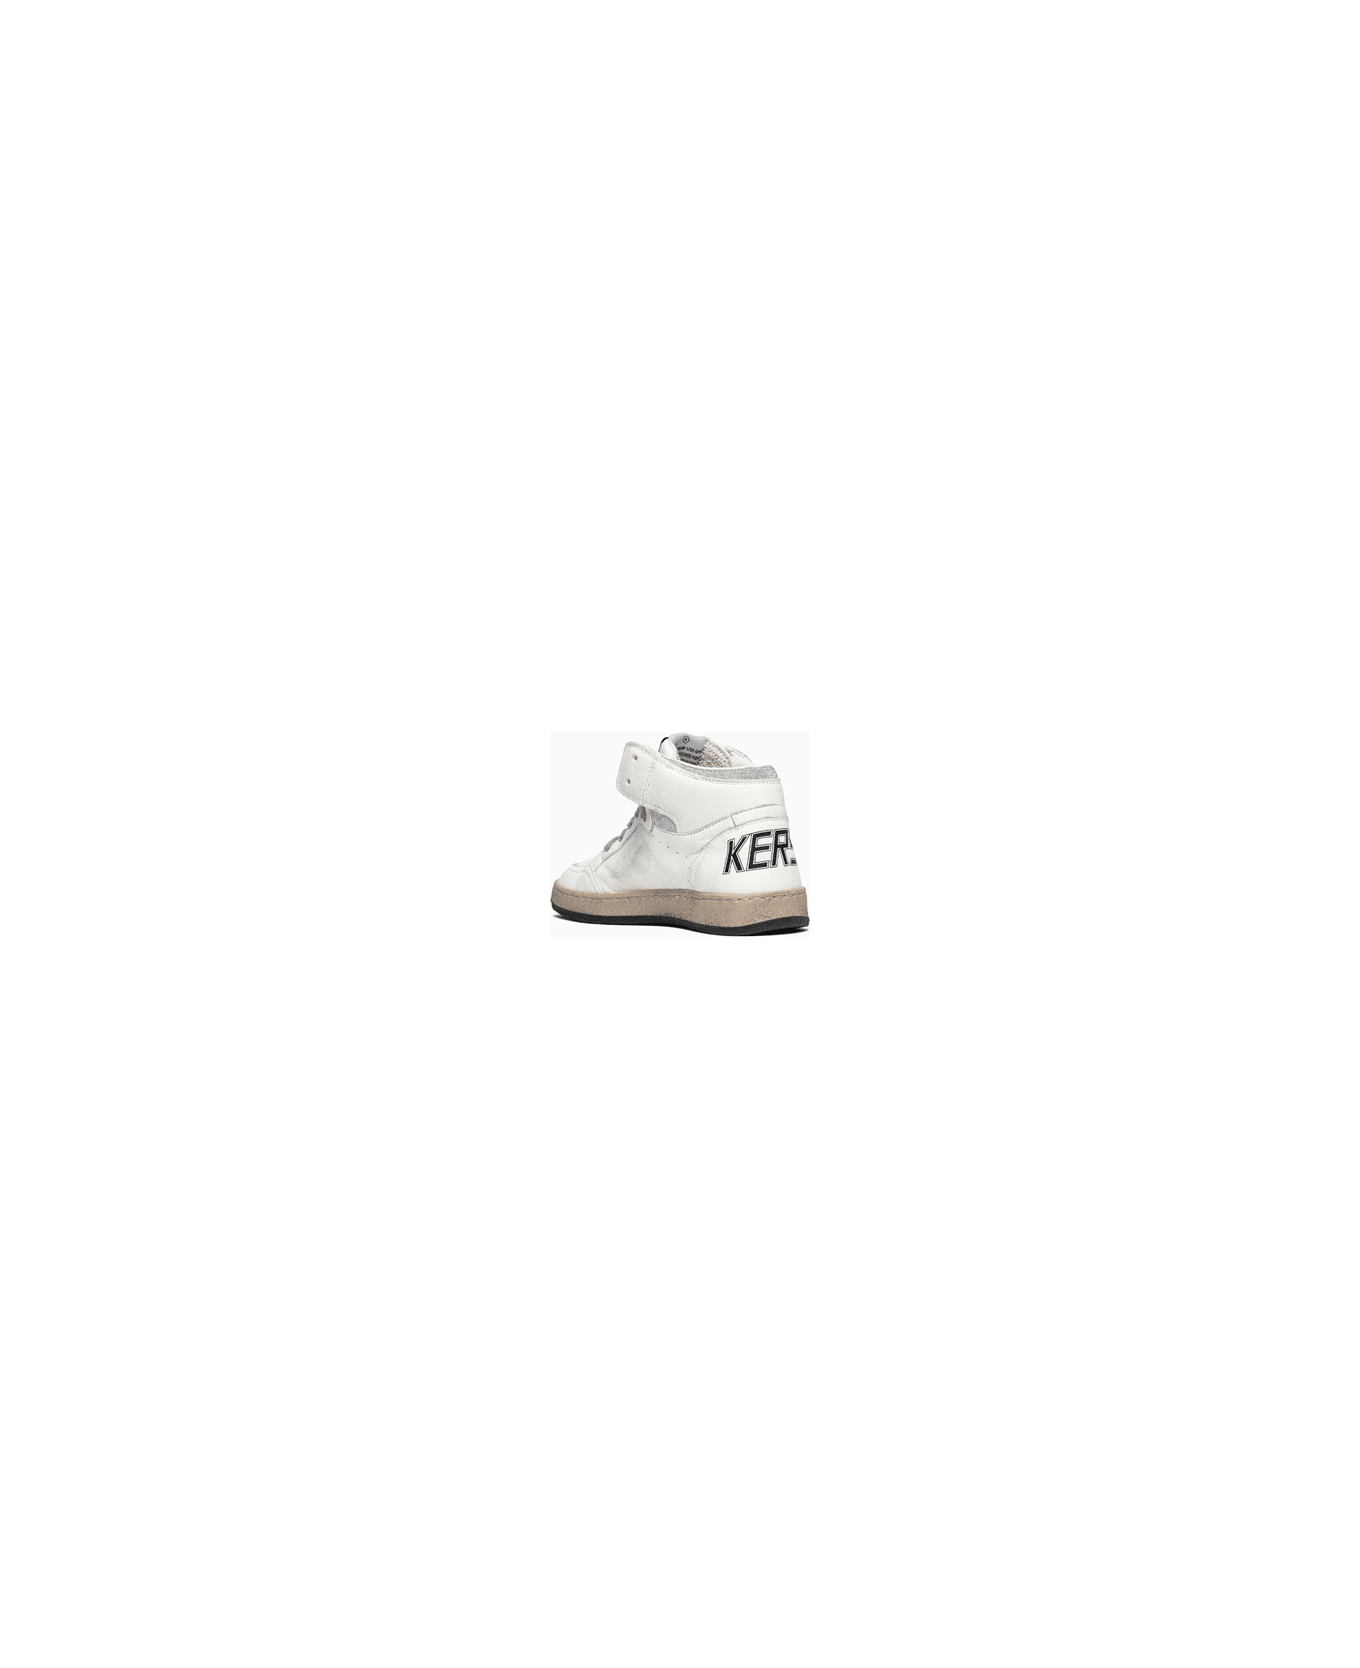 Golden Goose Sky Star Sneakers - WHITE/SILVER